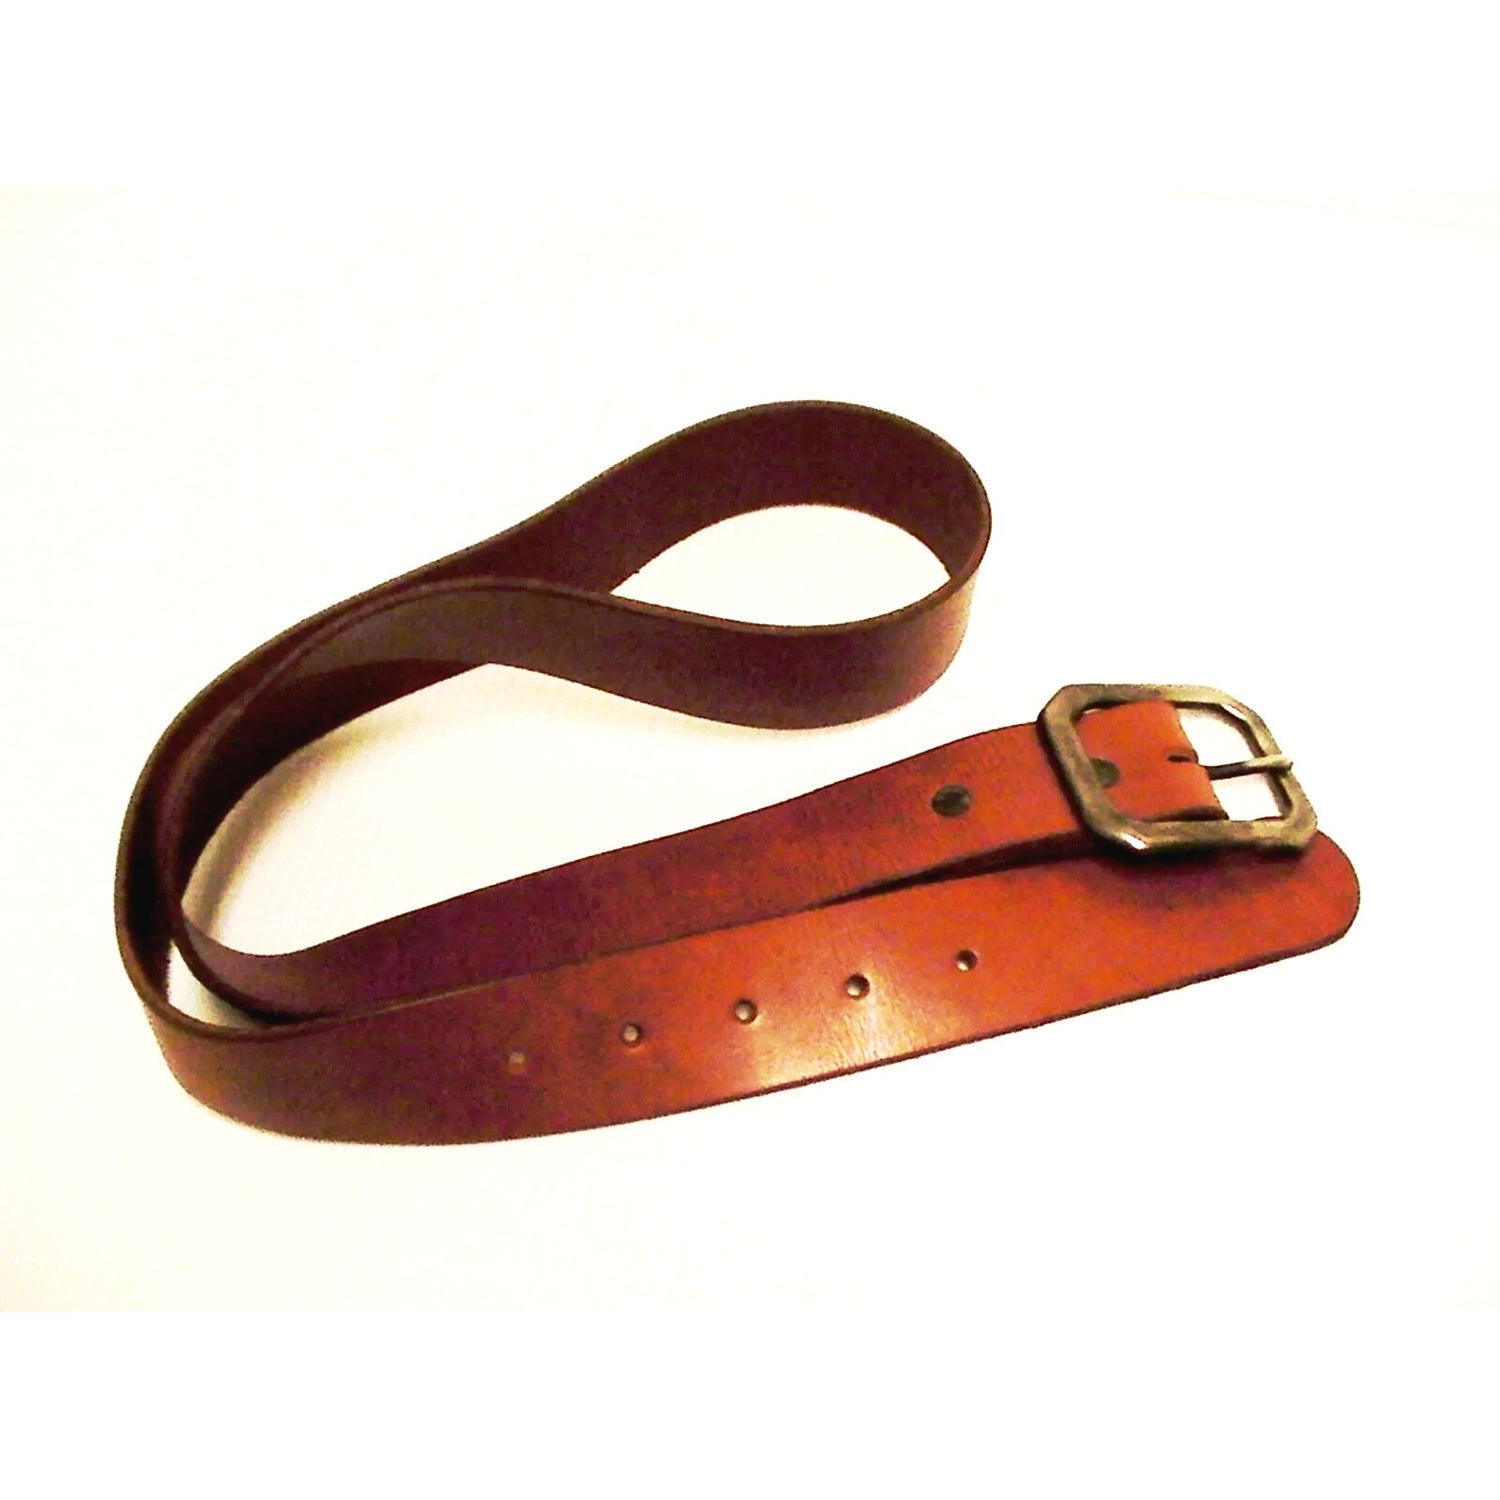 True religion belt genuine leather gunmetal buckle size 28 inch tan color new